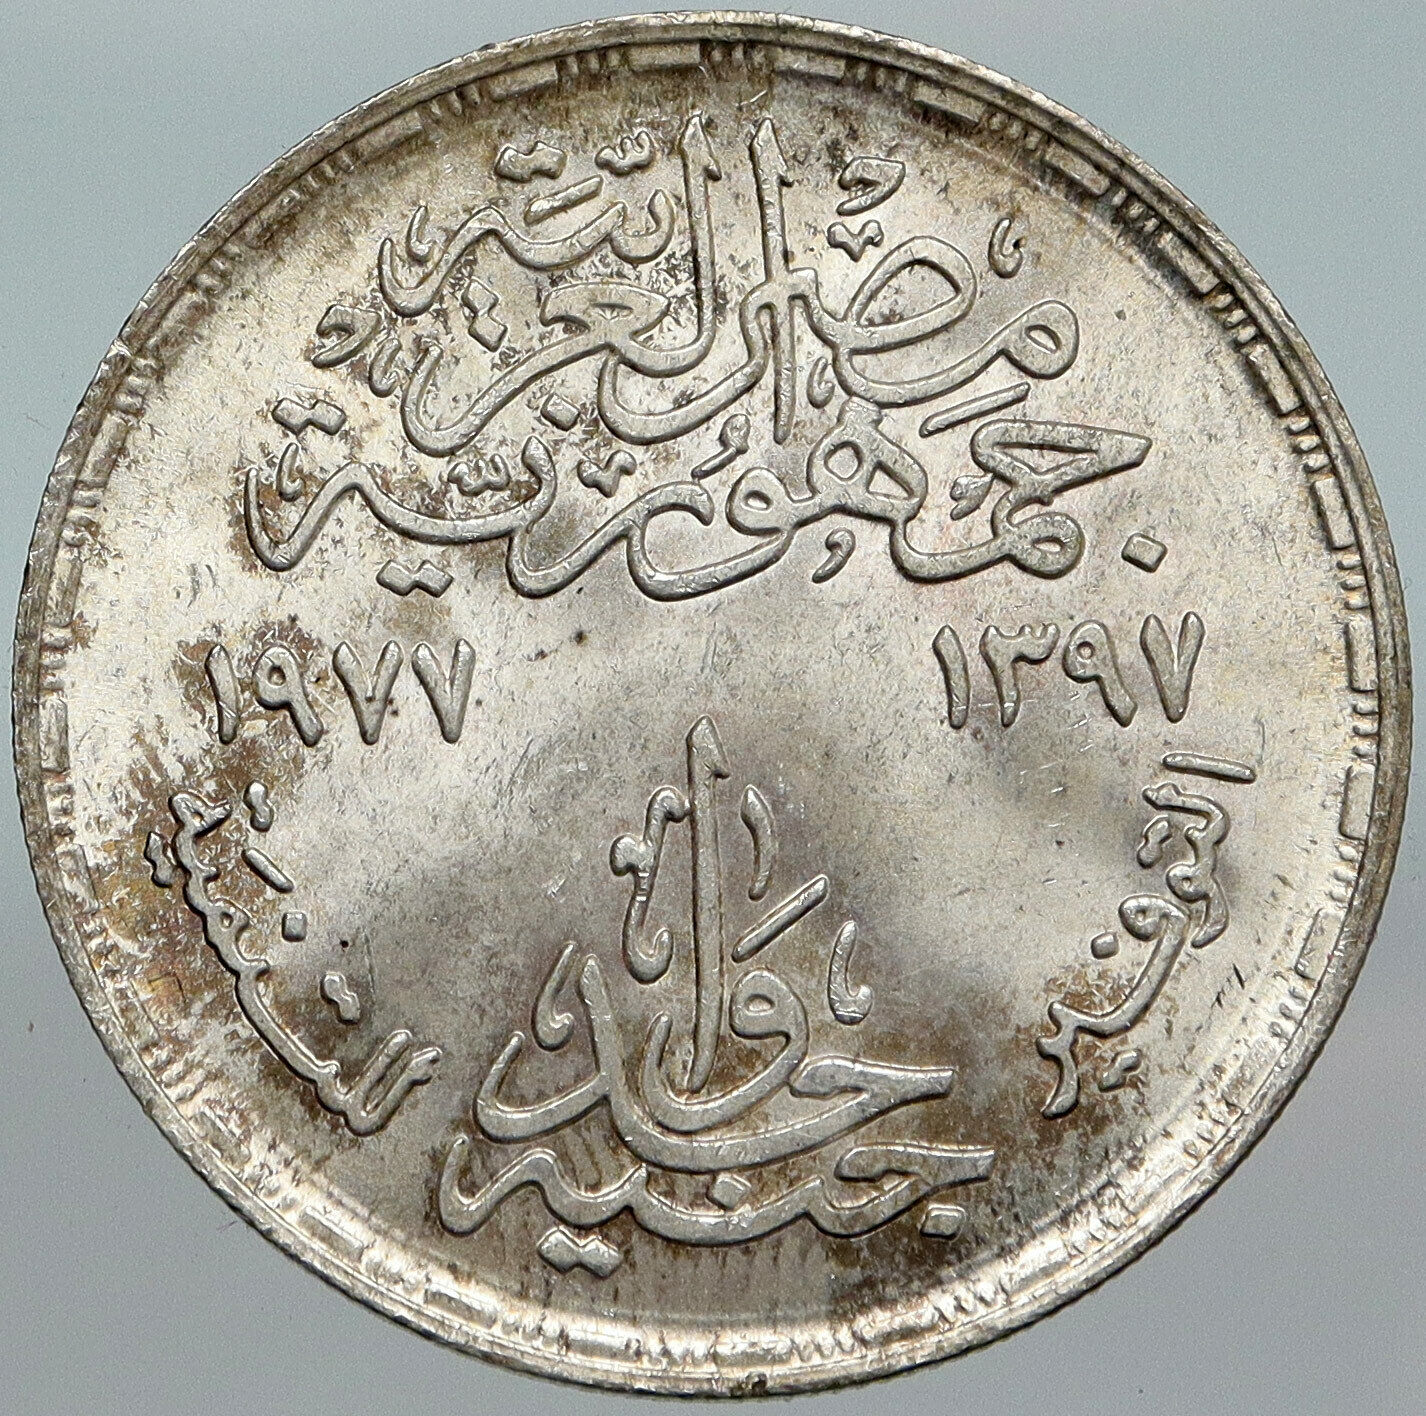 1977 EGYPT FAO - Saving for Development UN FOOD PROGRAM Silver Pound Coin i88050